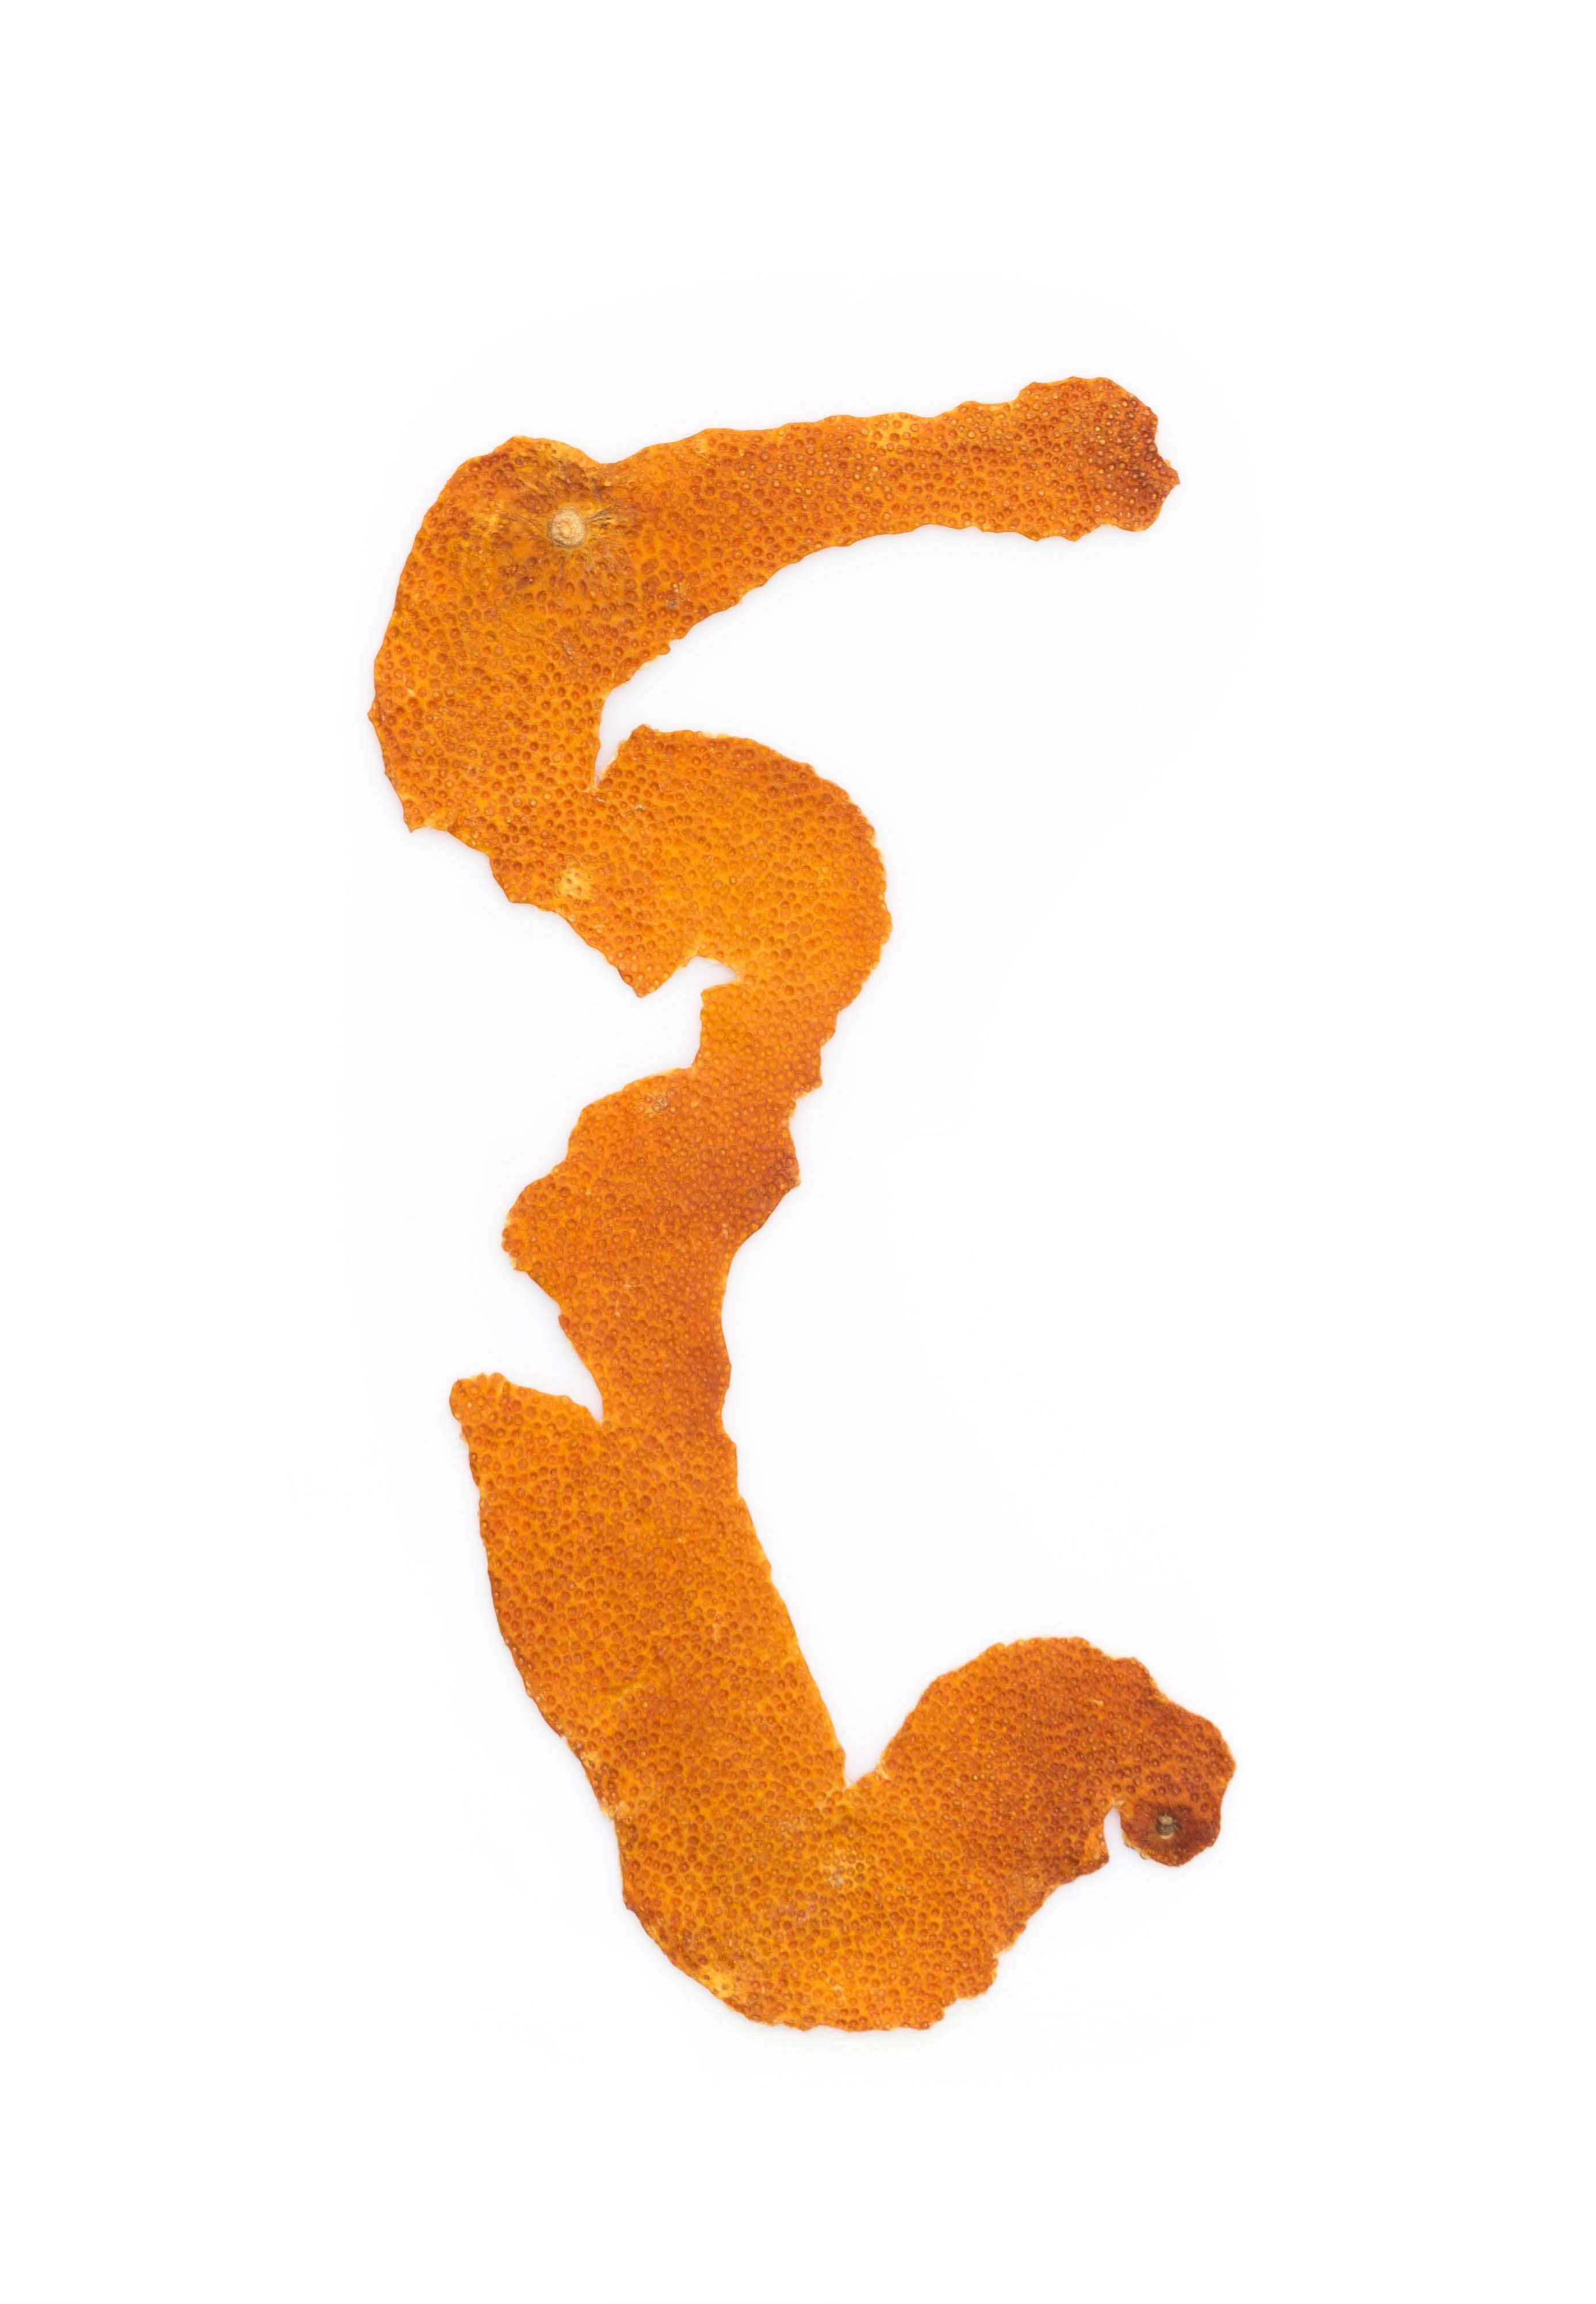 Skin Picking, Mandarinenhaut auf Opalglas, 21 cm x 14,5 cm, 2020